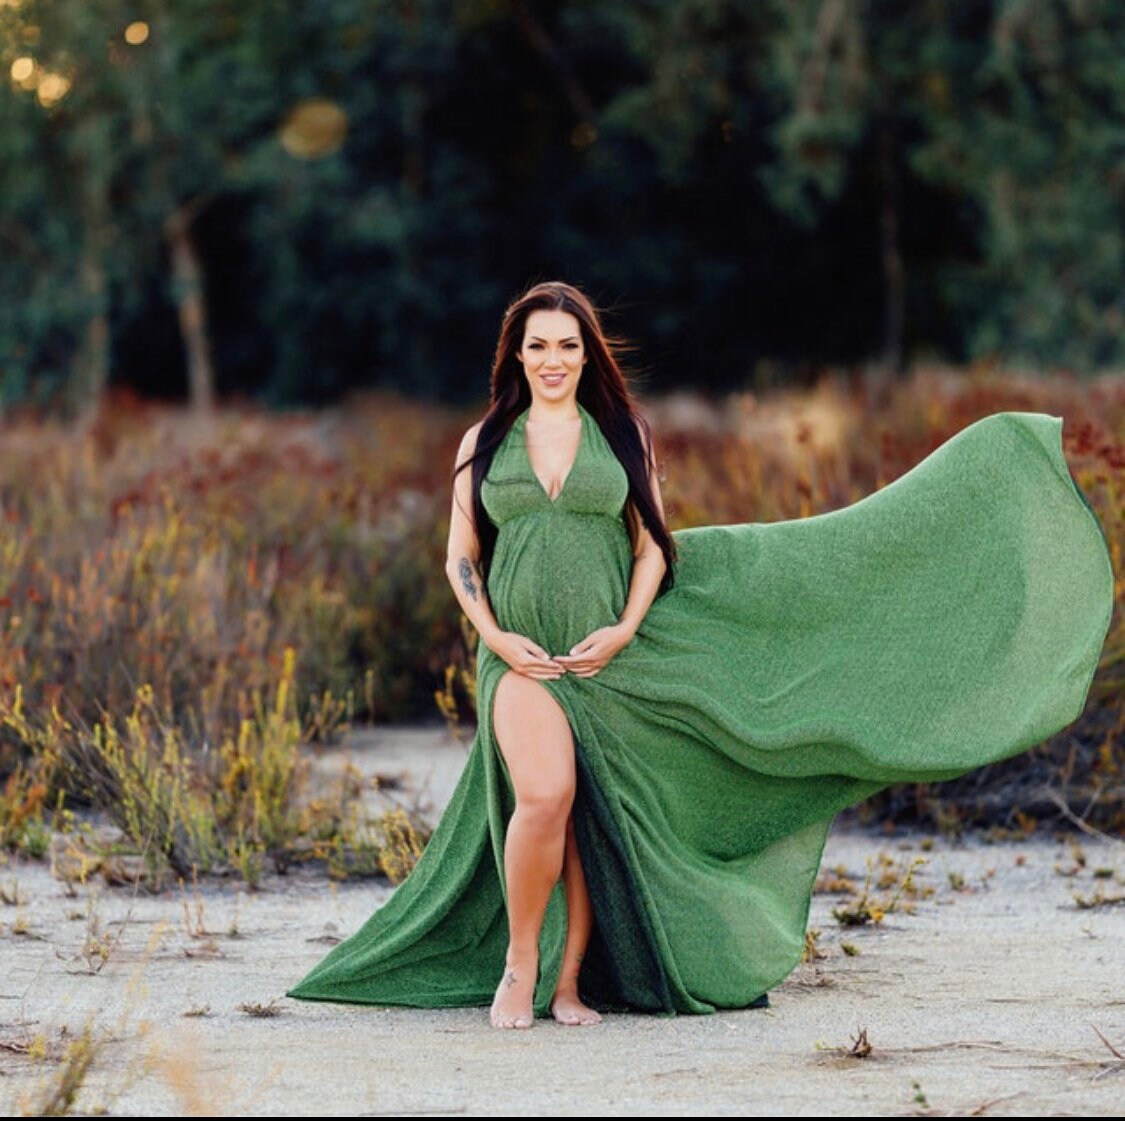 Sparkling Green Maternity Dress for Photo Shoot Halter Top - Etsy